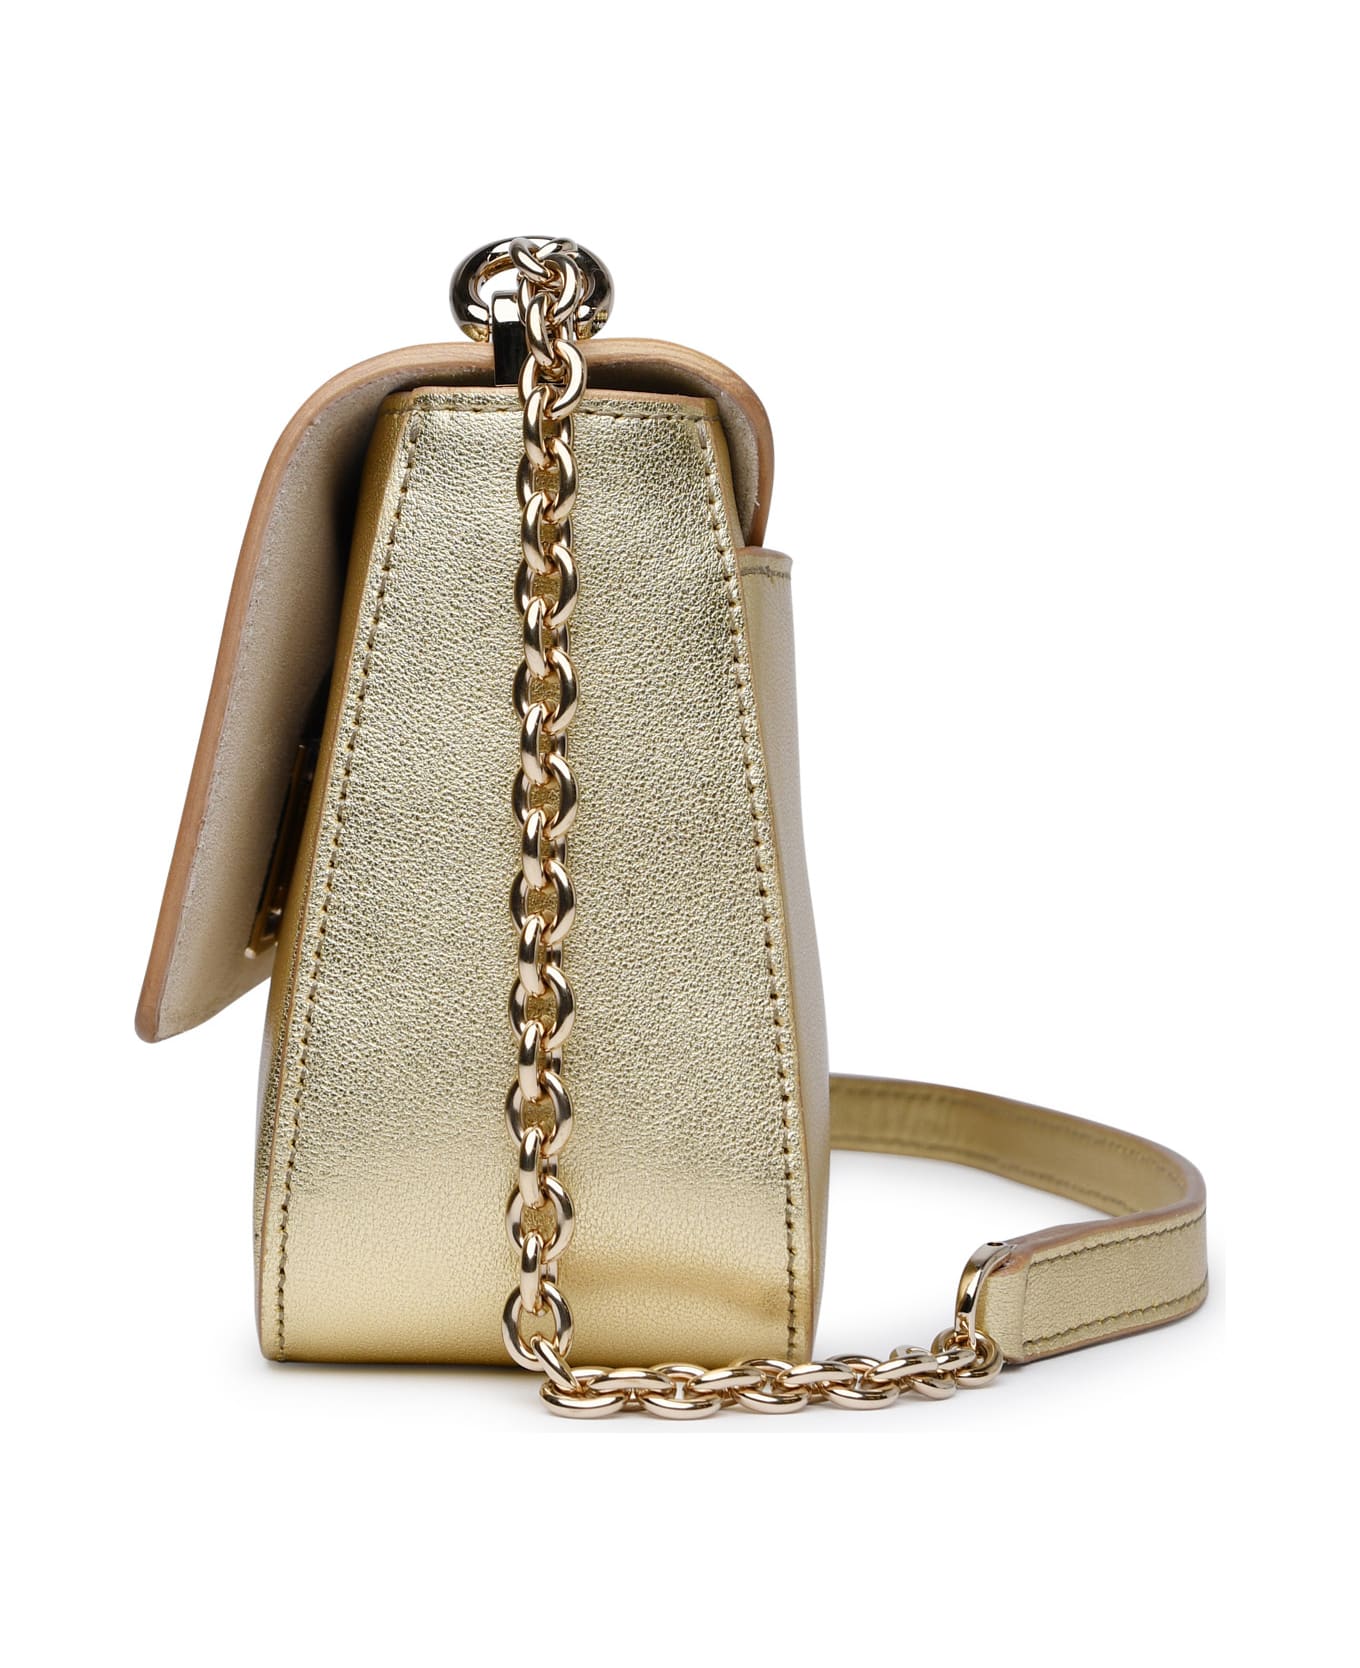 Furla 'furla 1927' Gold Calf Leather Bag - Oro ショルダーバッグ